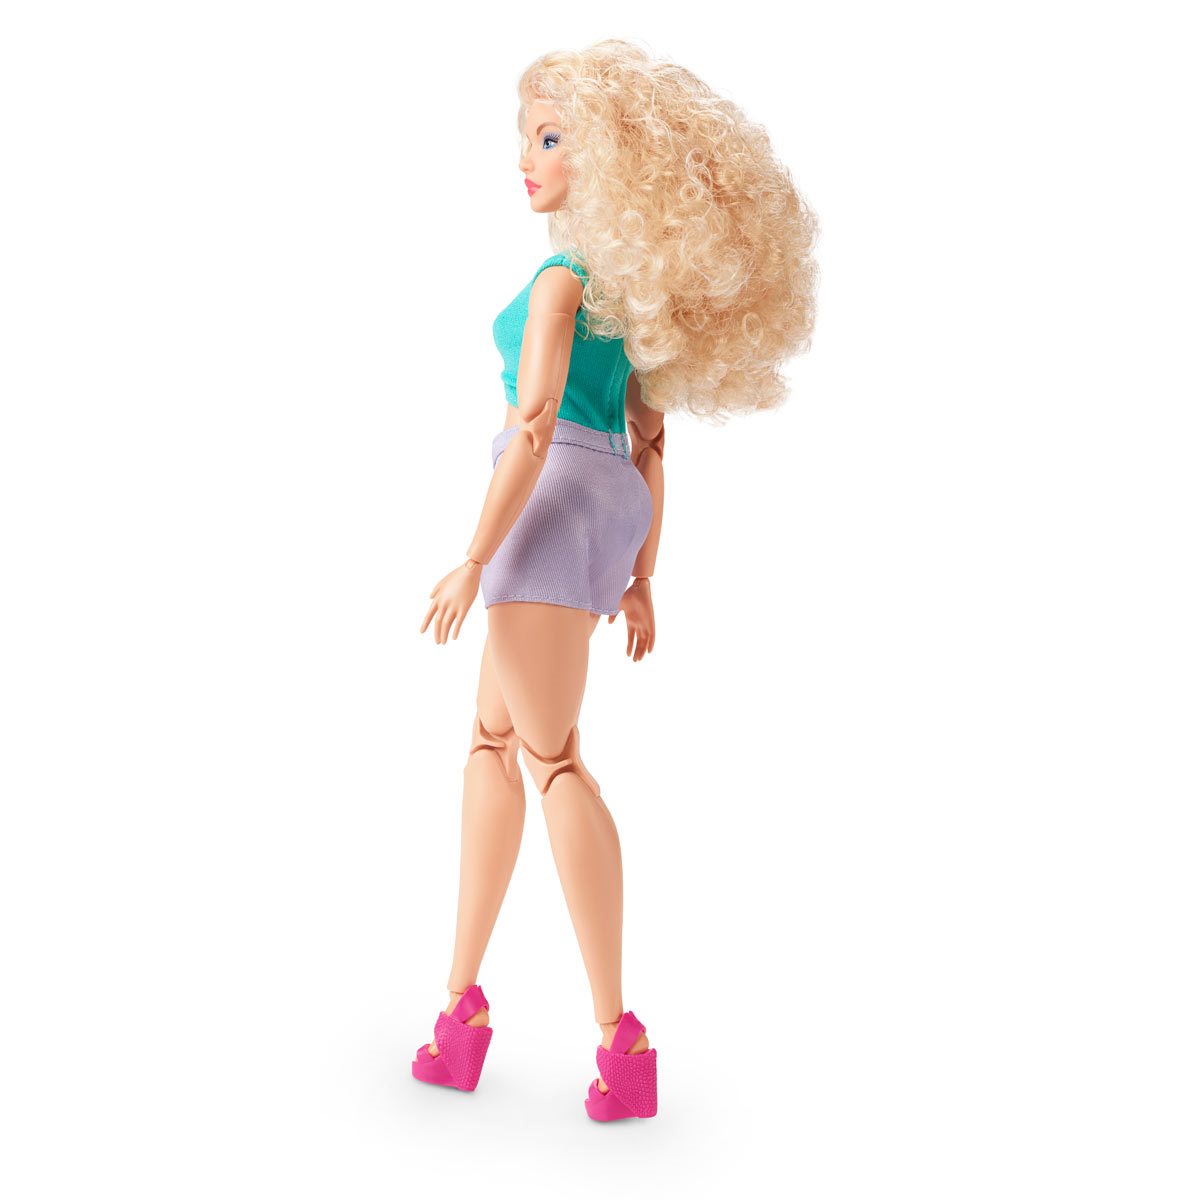 Barbie Fashionistas Doll, Curvy Body Type with Stripe Cut-Out